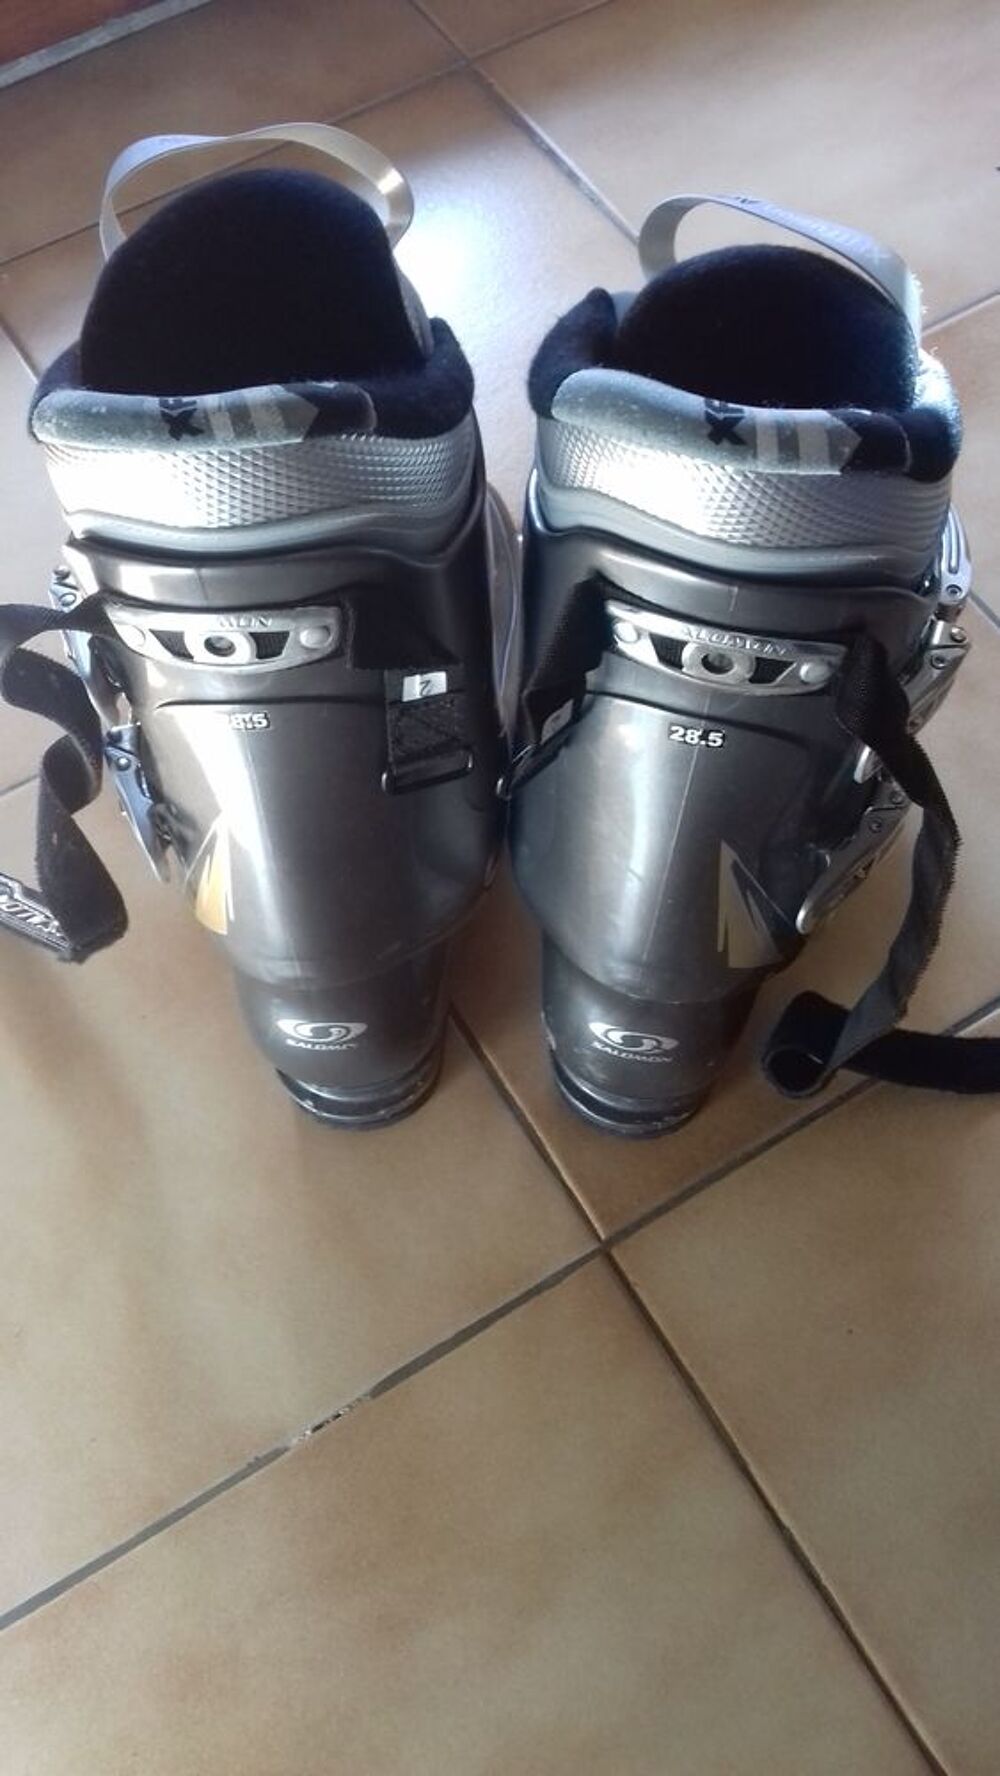 Chaussures de ski SALOMON mission 5 taille 43/44 ( 28:5 )
Chaussures